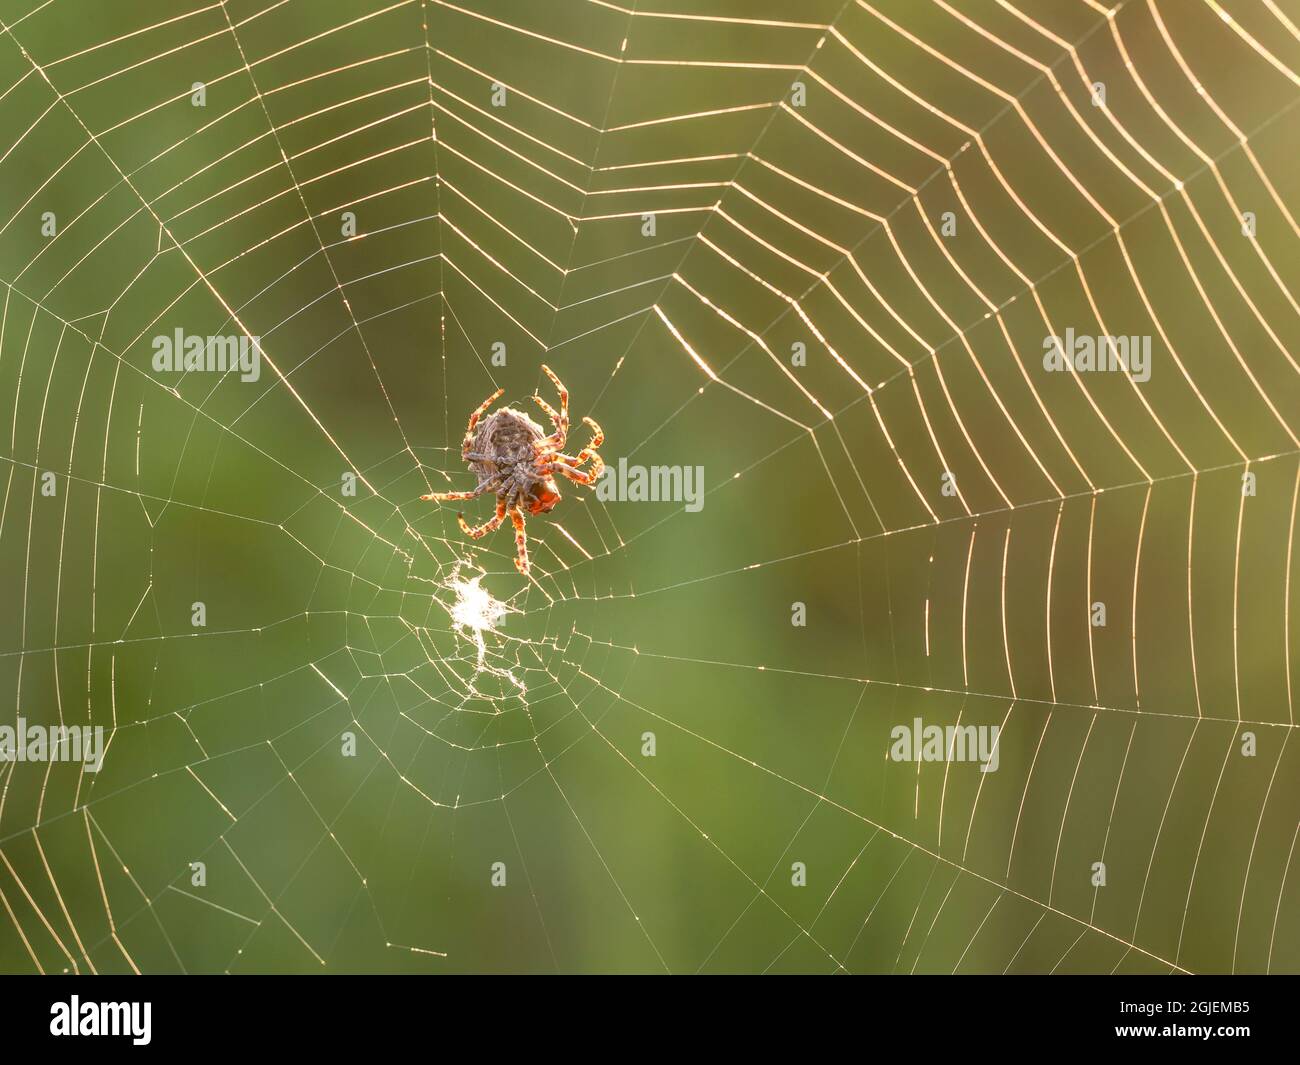 Orbweaver spider making web, prairie, Tzi-Sho Natural Area, Prairie State Park, Missouri Stock Photo